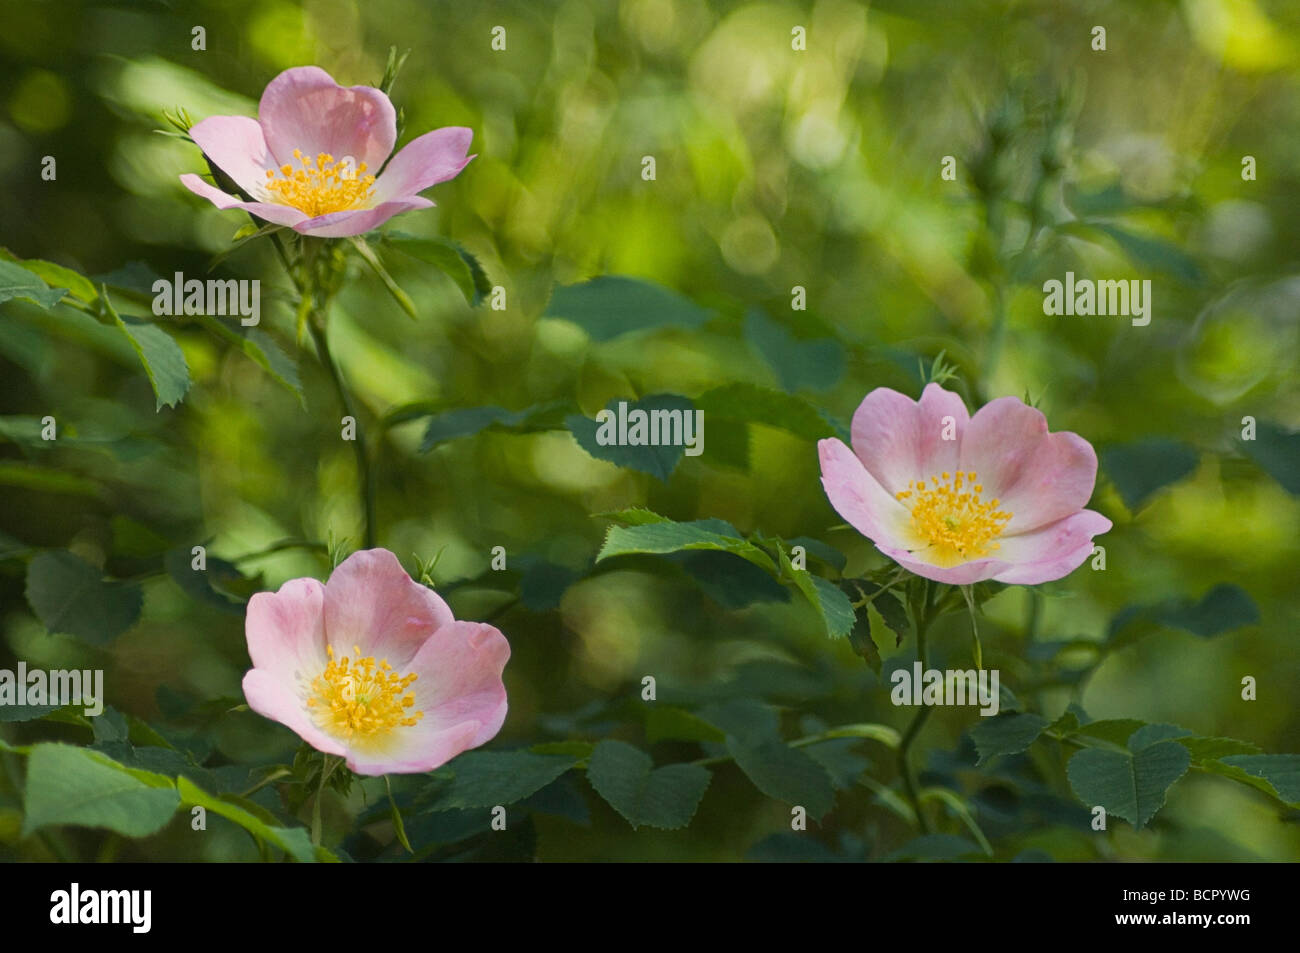 Rosa Canina, Hund rose rosa Blumen wachsen am Strauch. Stockfoto